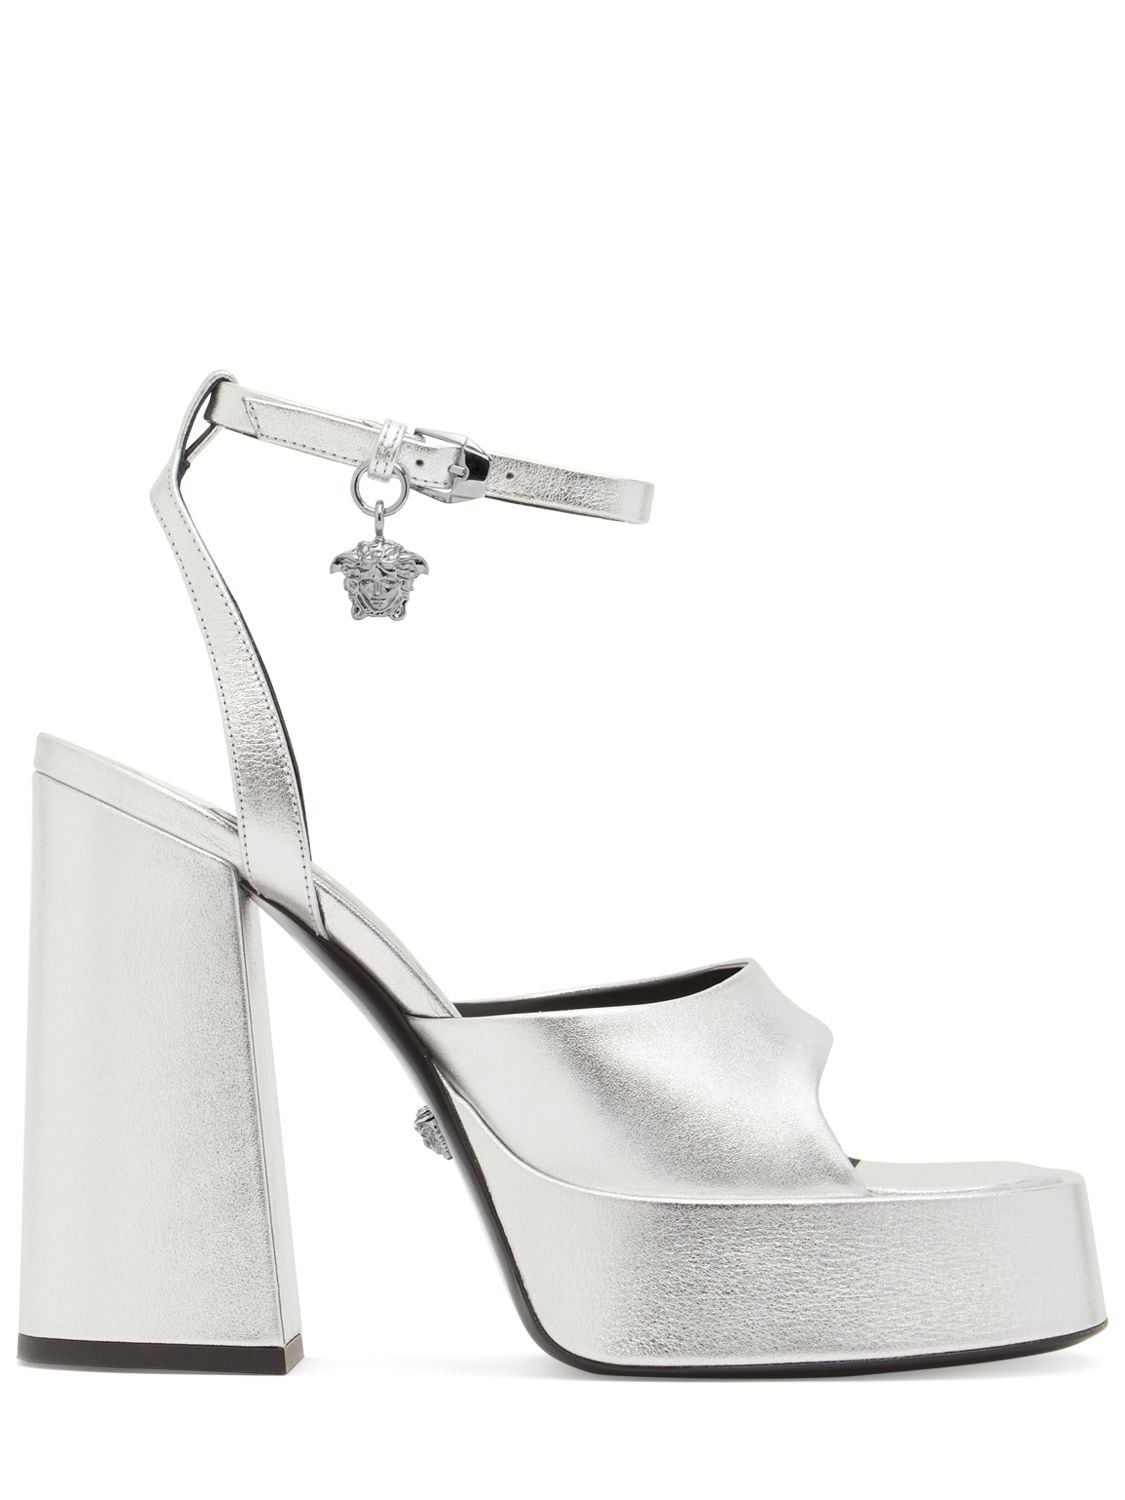 Versace Women's 120mm Metallic Leather Platform Sandals In Silver